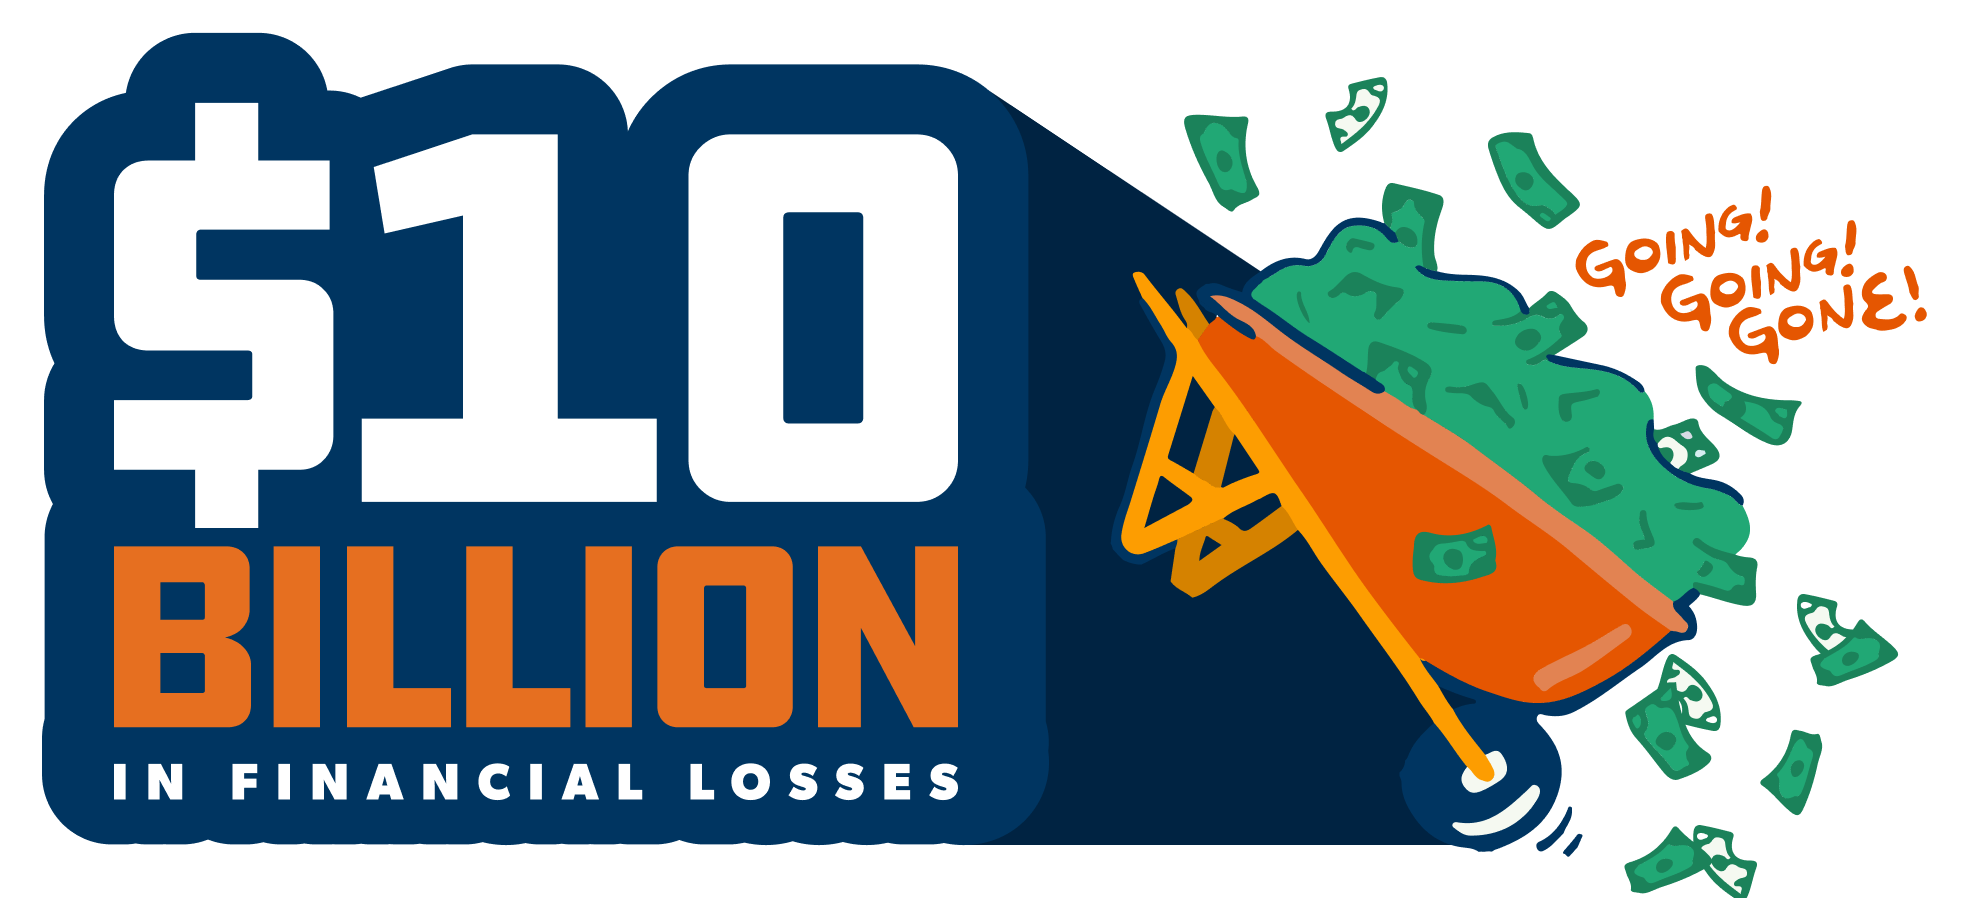 $10 billion in financial losses.